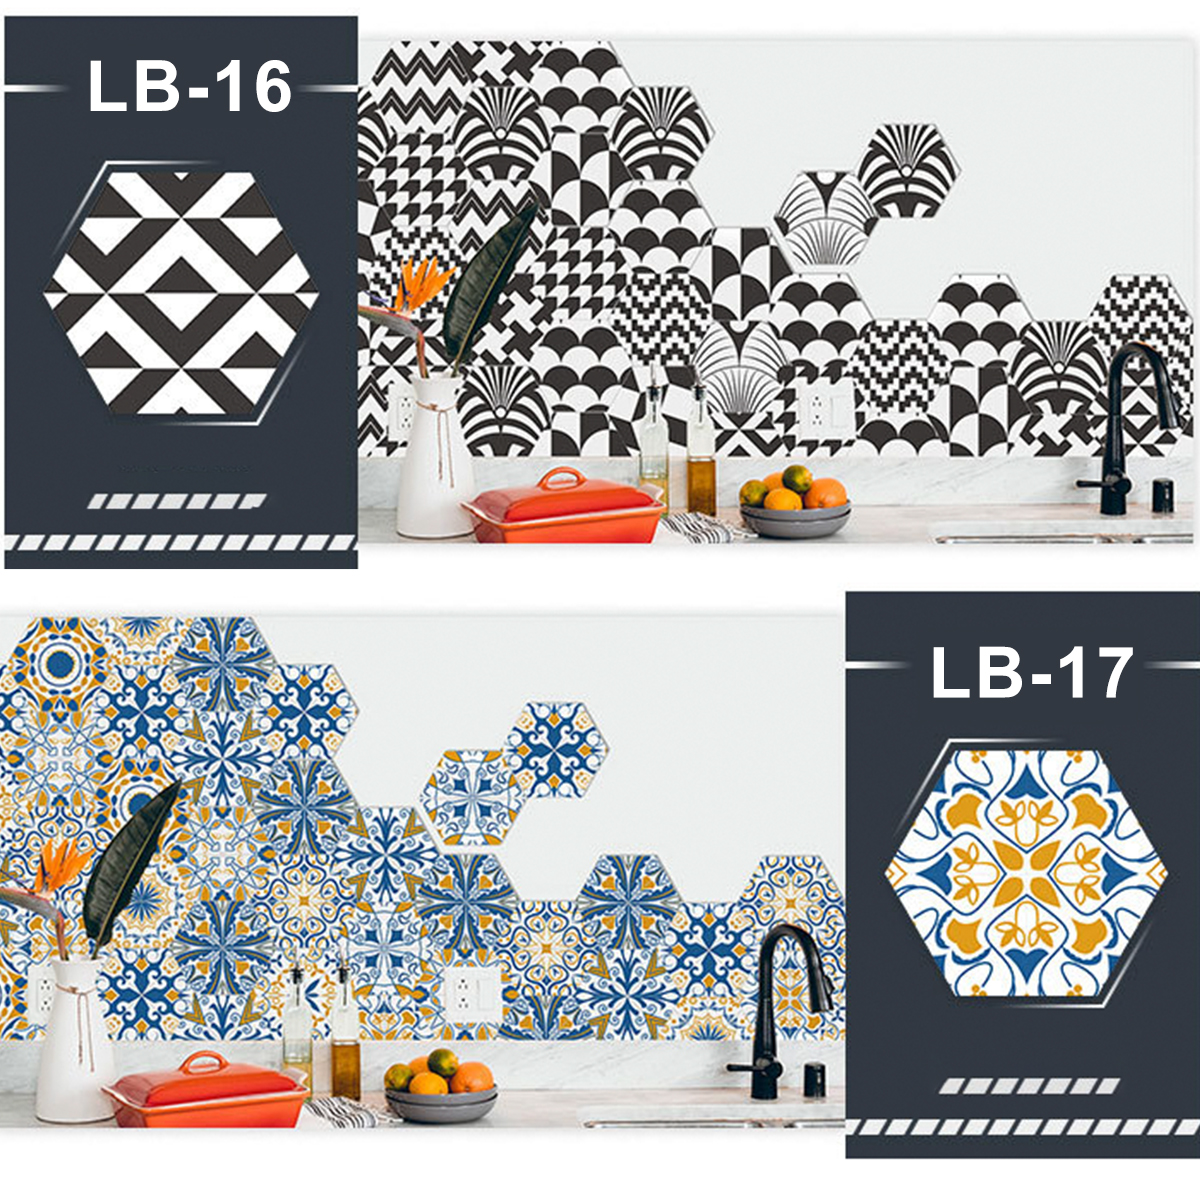 Hexagonal-Floor-Stickers-Special-Shaped-Tile-Stickers-Self-Adhesive-Bathroom-Toilet-Waterproof-And-W-1859007-10